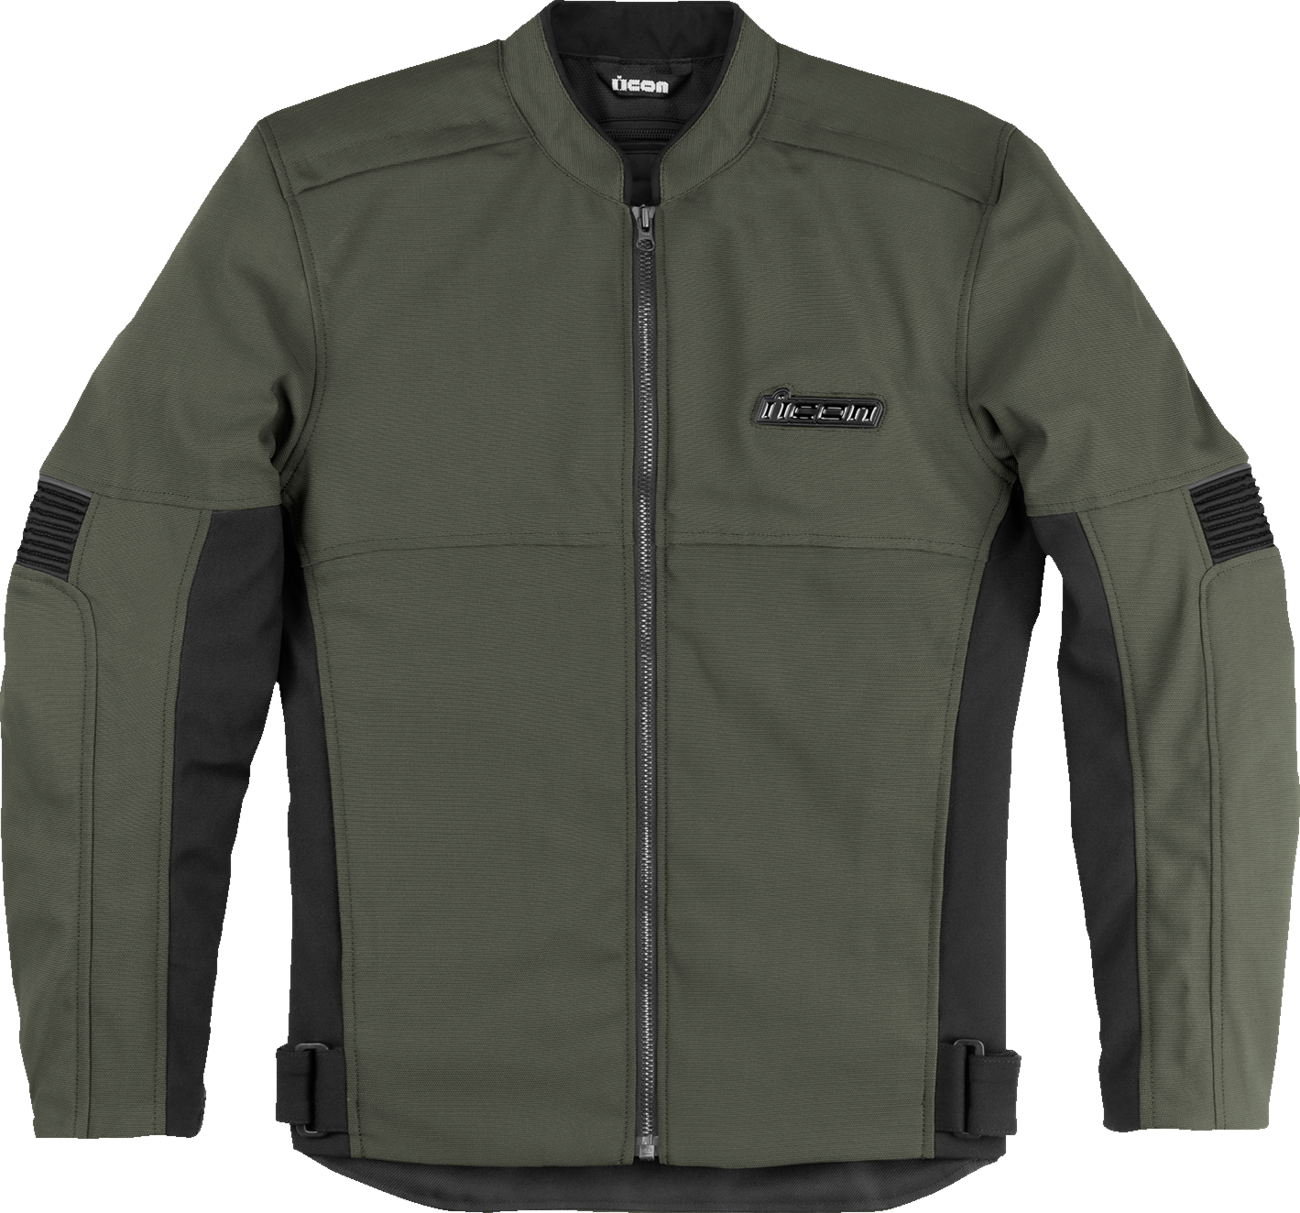 ICON Slabtown Jacket - Green - XL 2820-6264